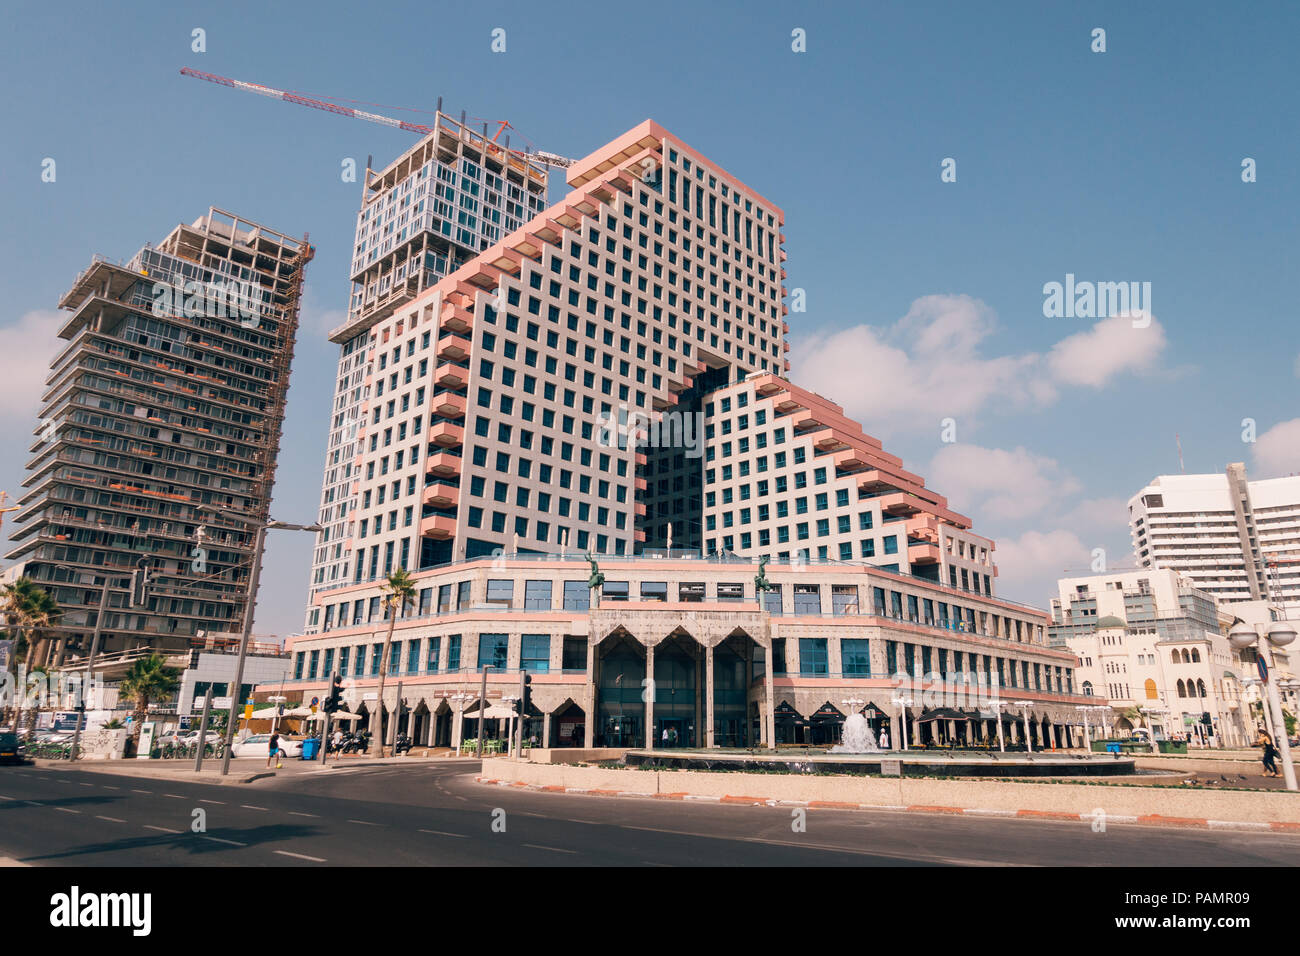 the Israeli Opera tower building on the esplanade in Tel Aviv, Israel Stock Photo